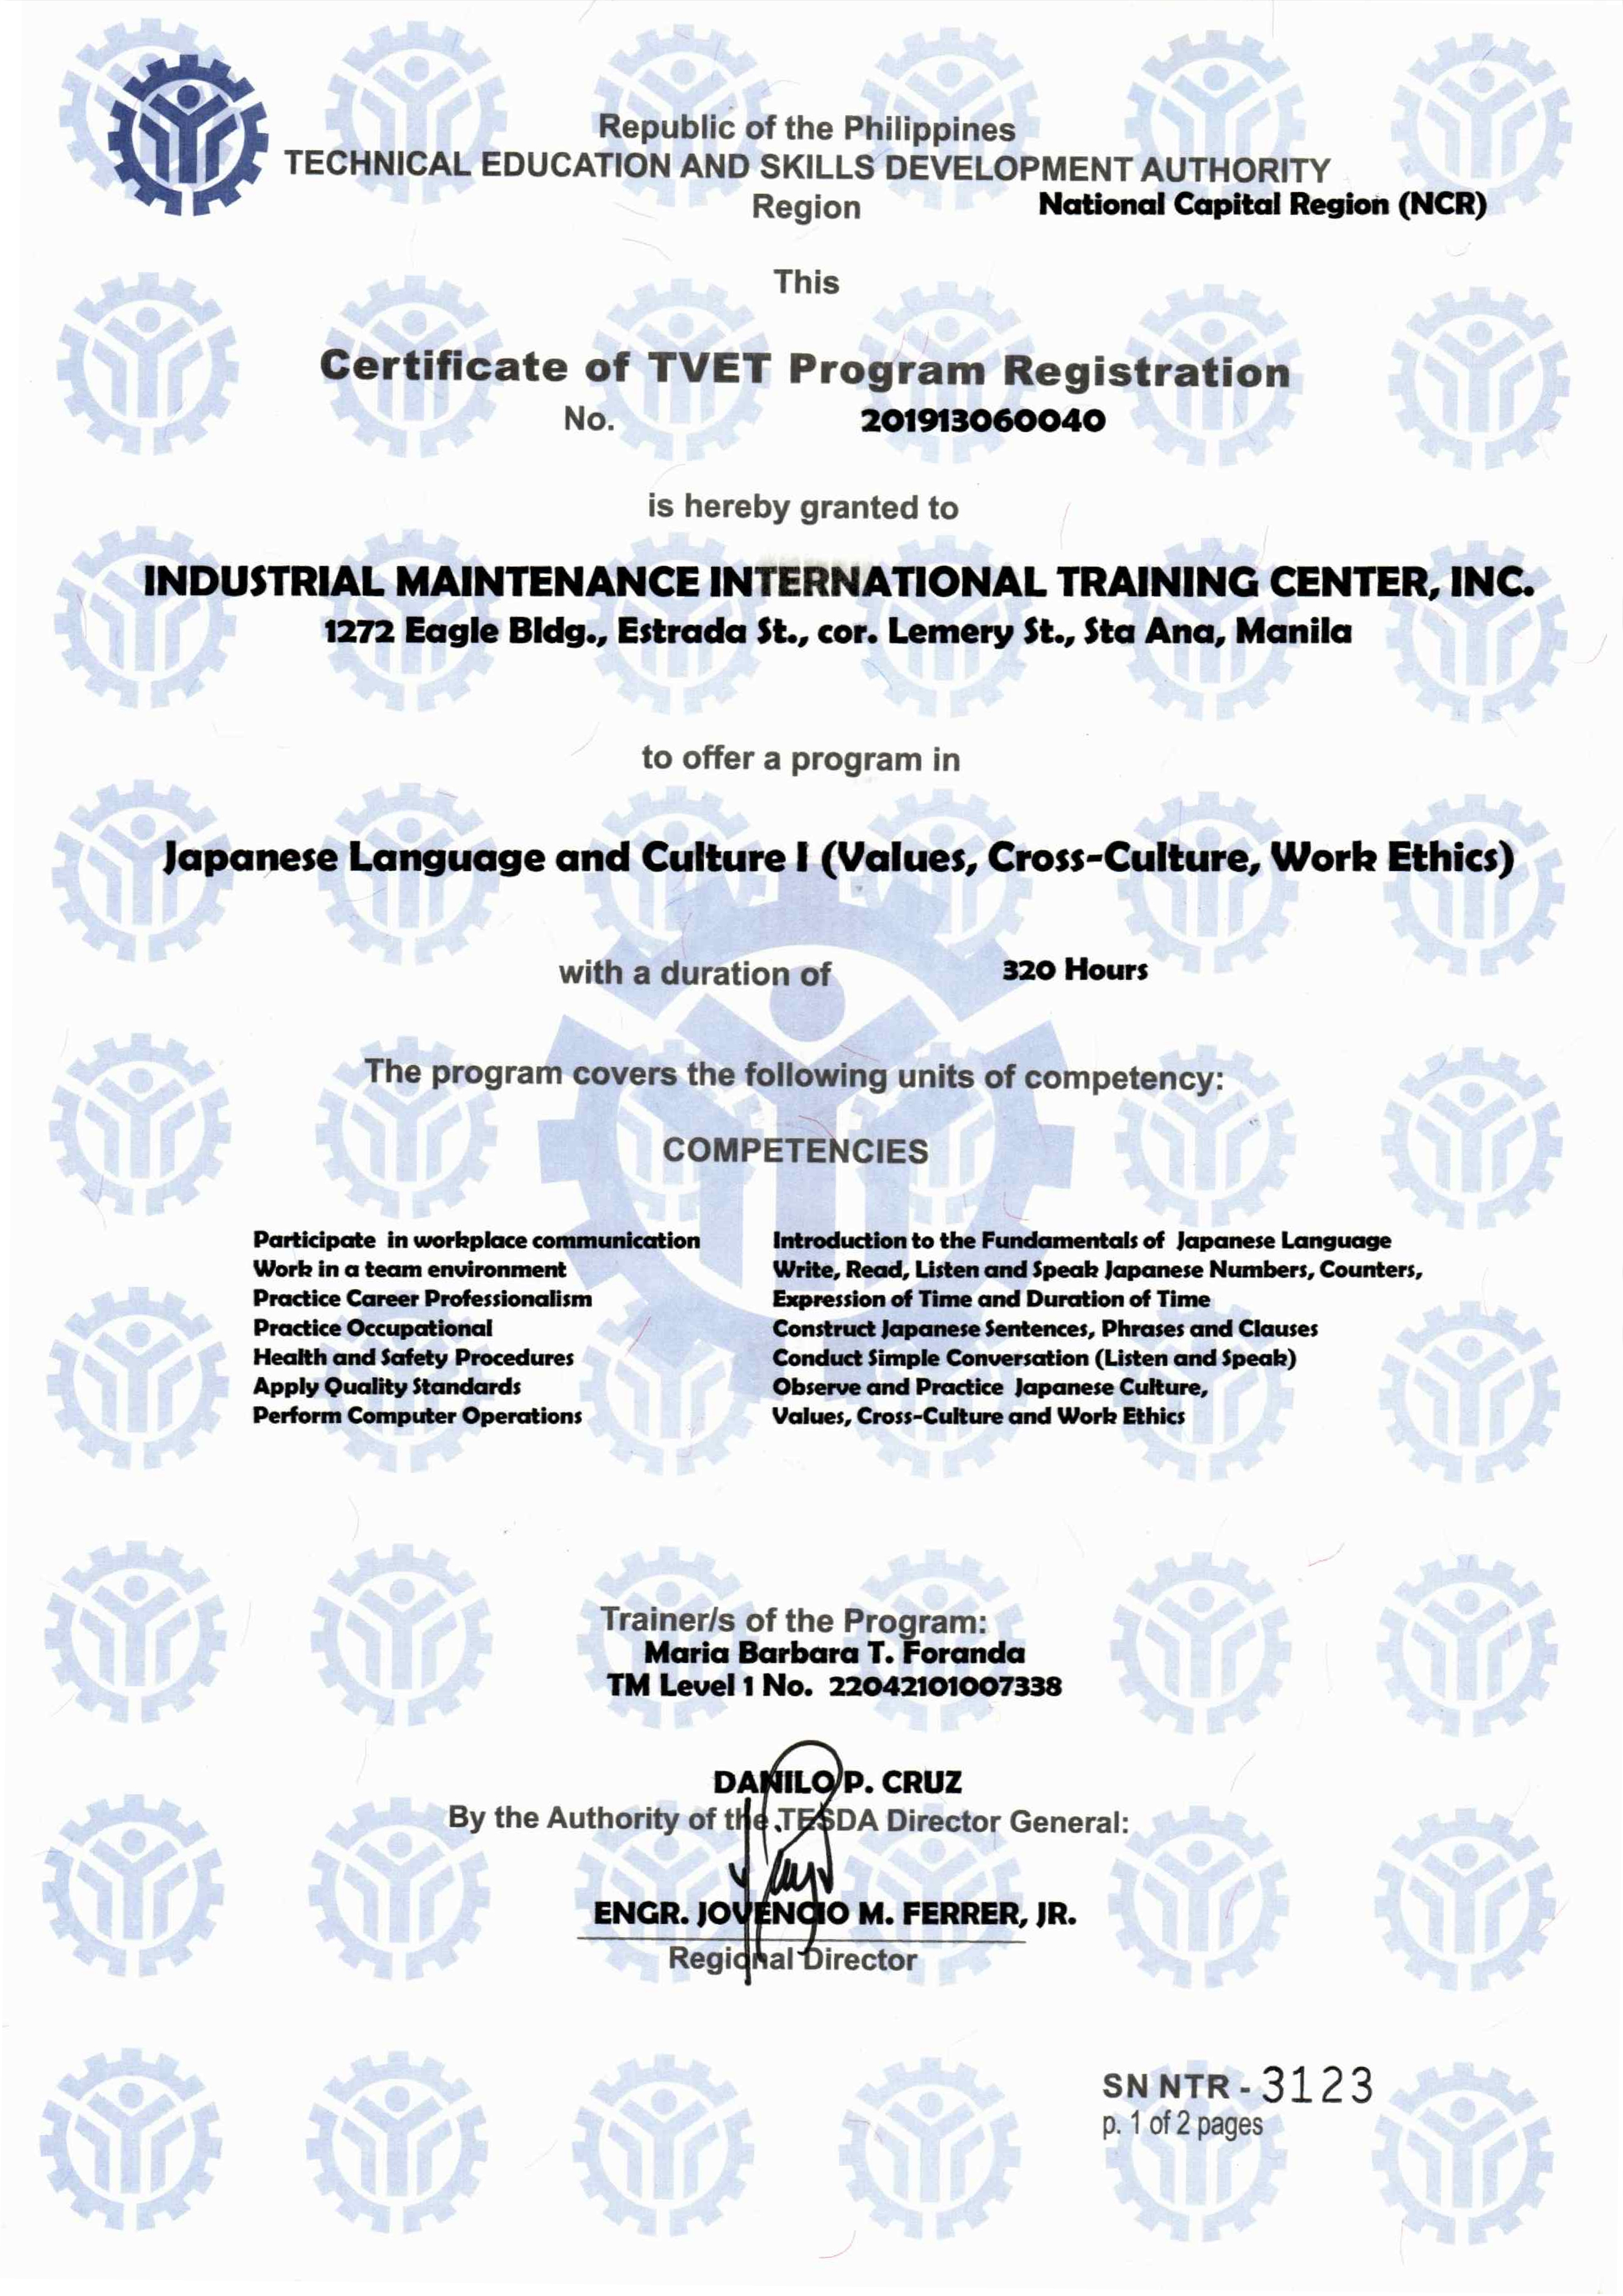 TESDA - Certificate of TVET Program Registration